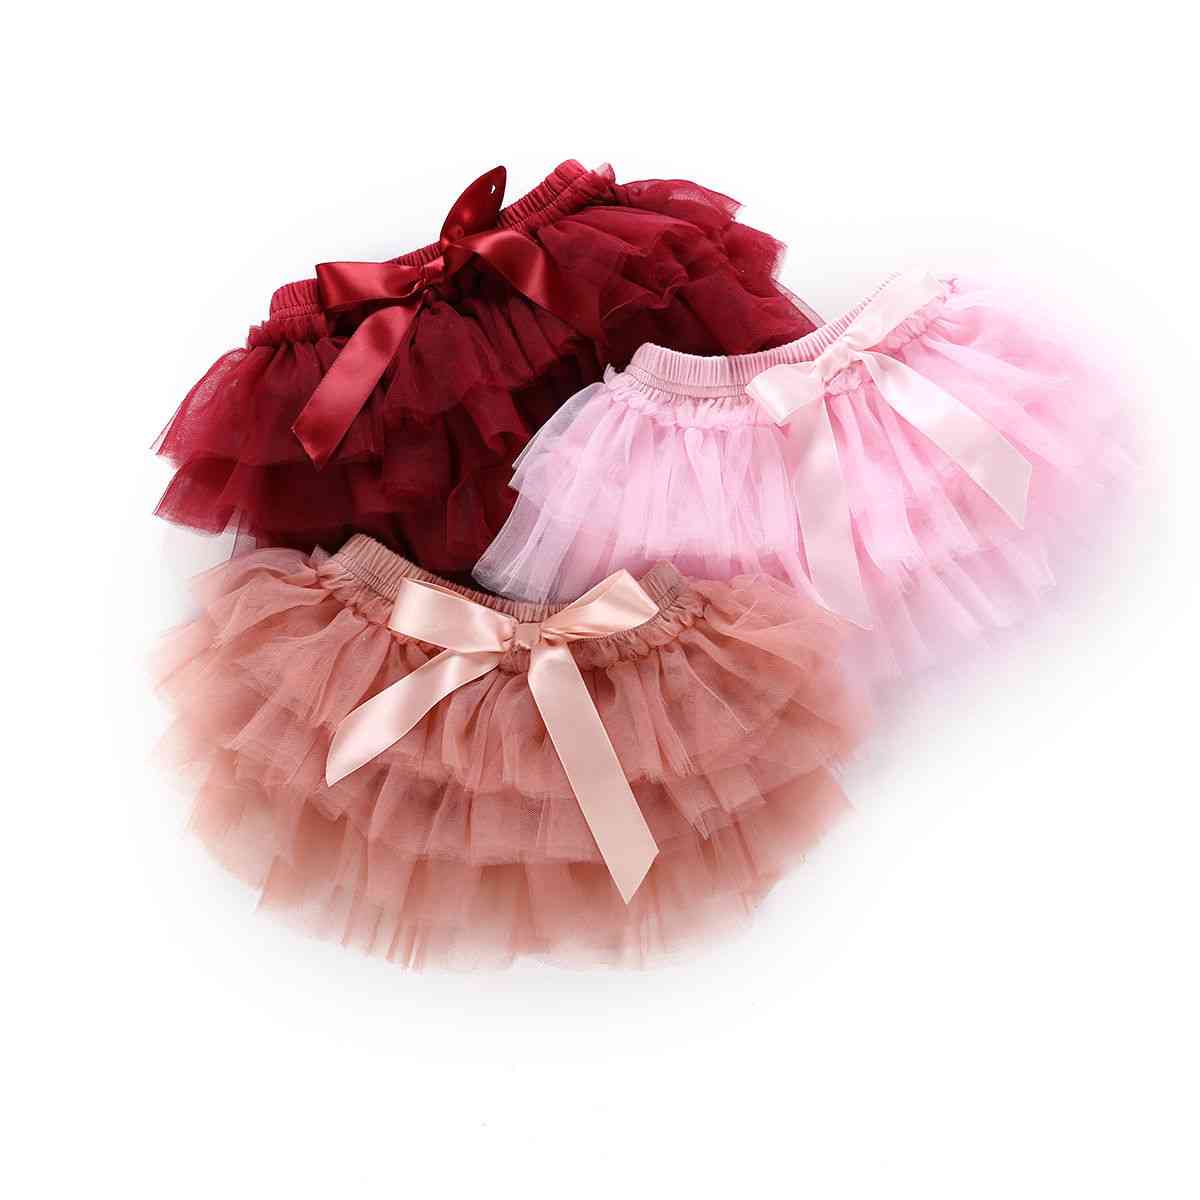 Baby Layer Ballet Dance Pettiskirt, Tutu Skirt Photo Props